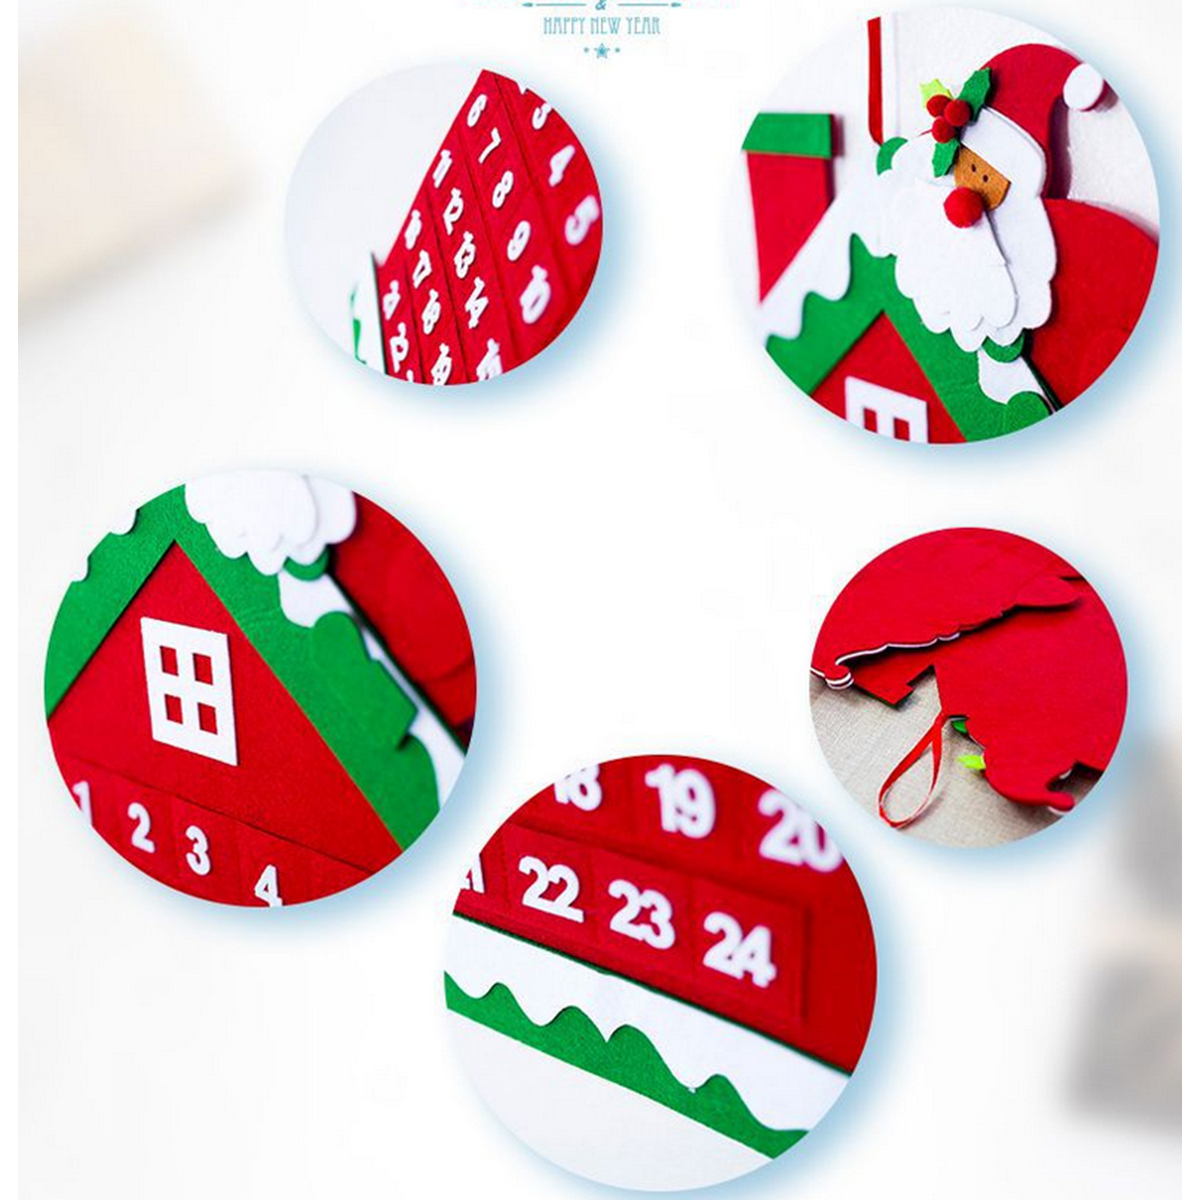 Christmas-Tree-Advent-Calendar-Felt-Fabric-Holiday-Countdown-Christmas-Display-Decor-1370488-2